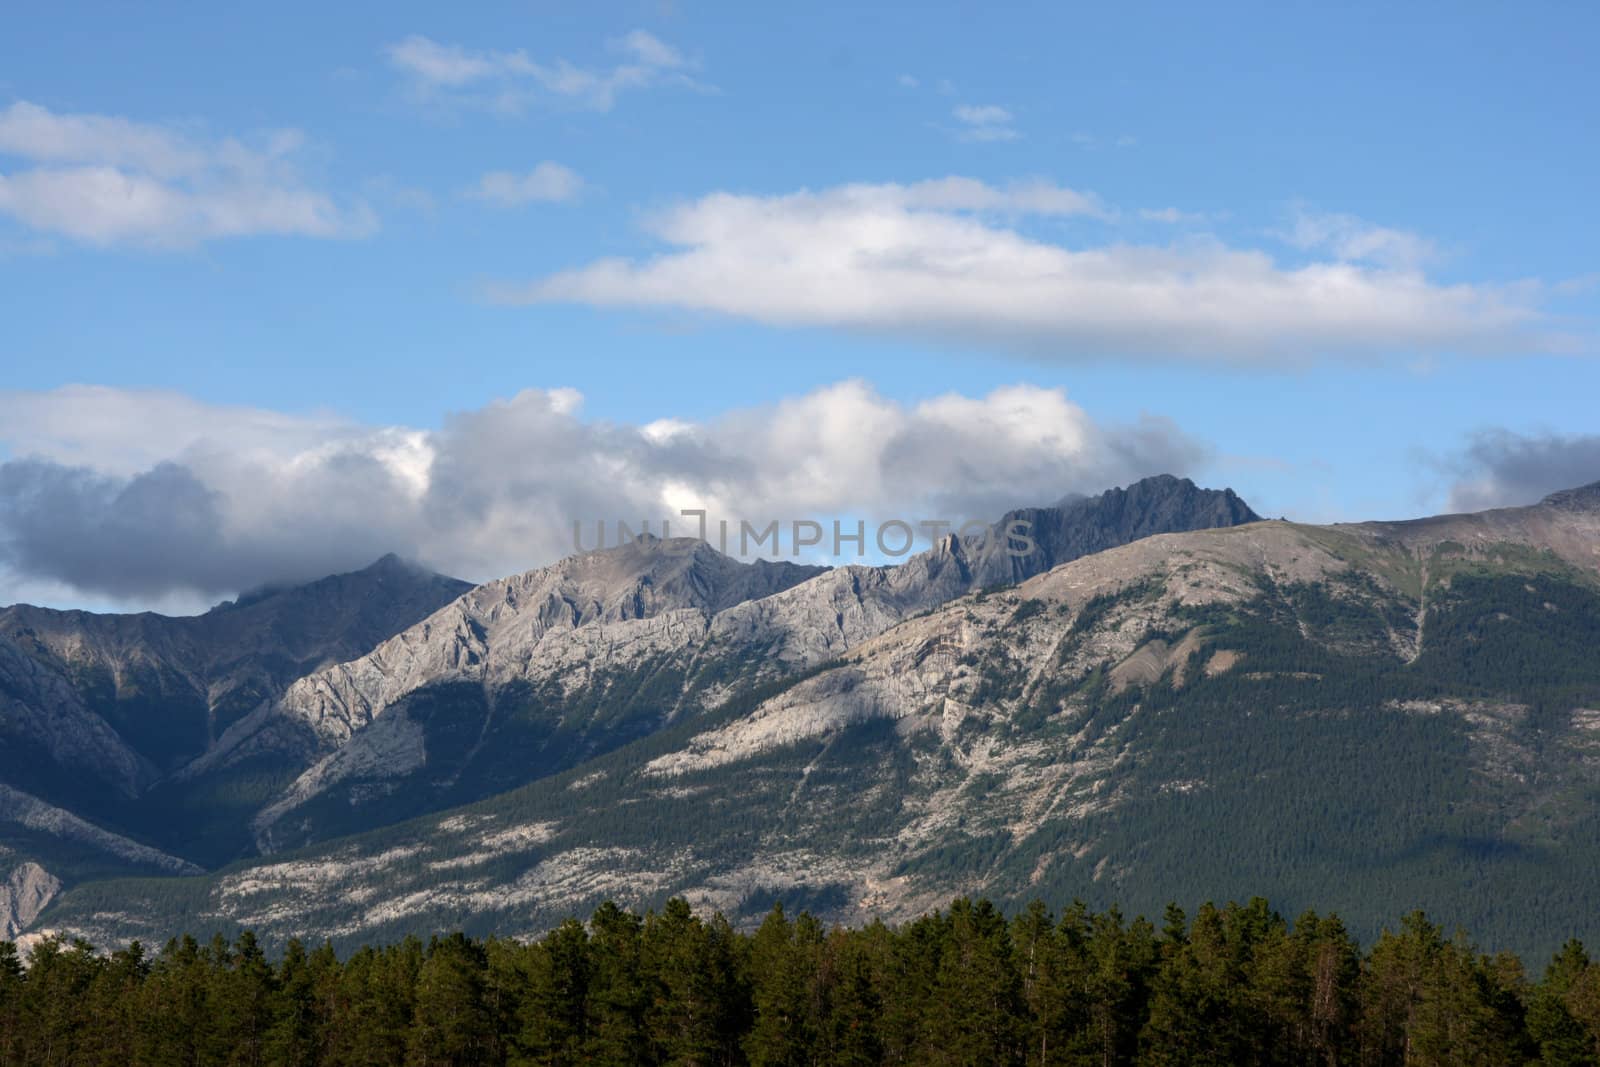 Clouds over mountains - beautiful vista in Jasper National Park, Canada.